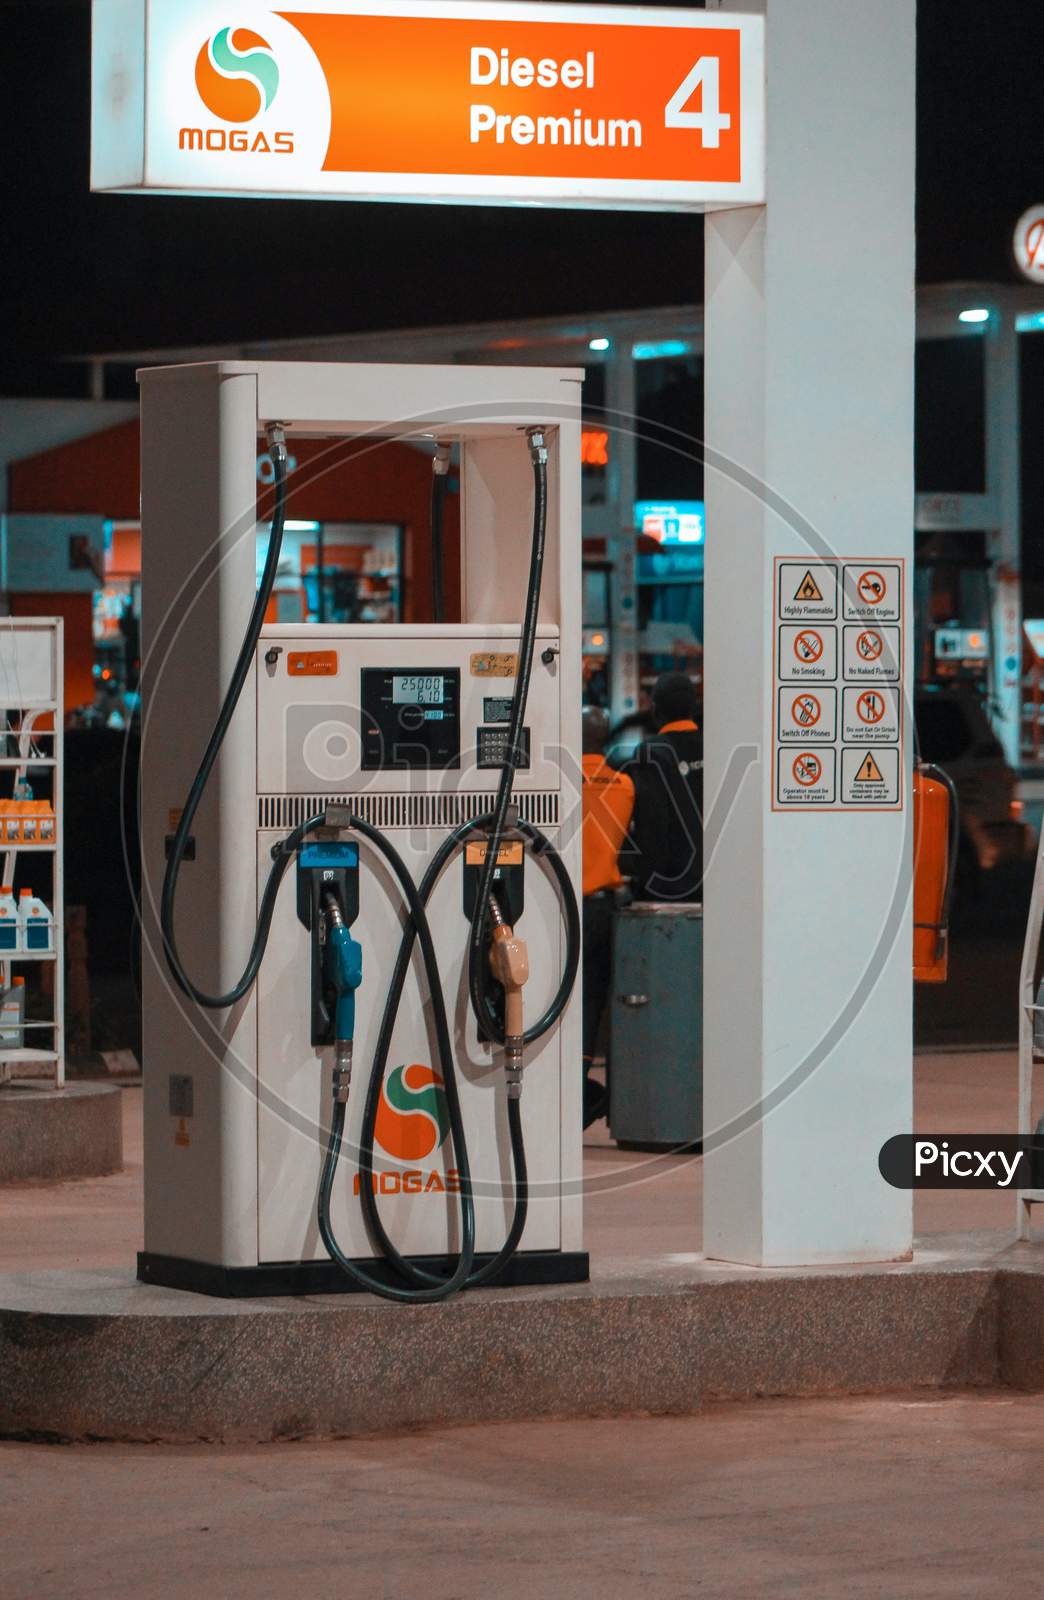 Petrol pump after petrol price rises